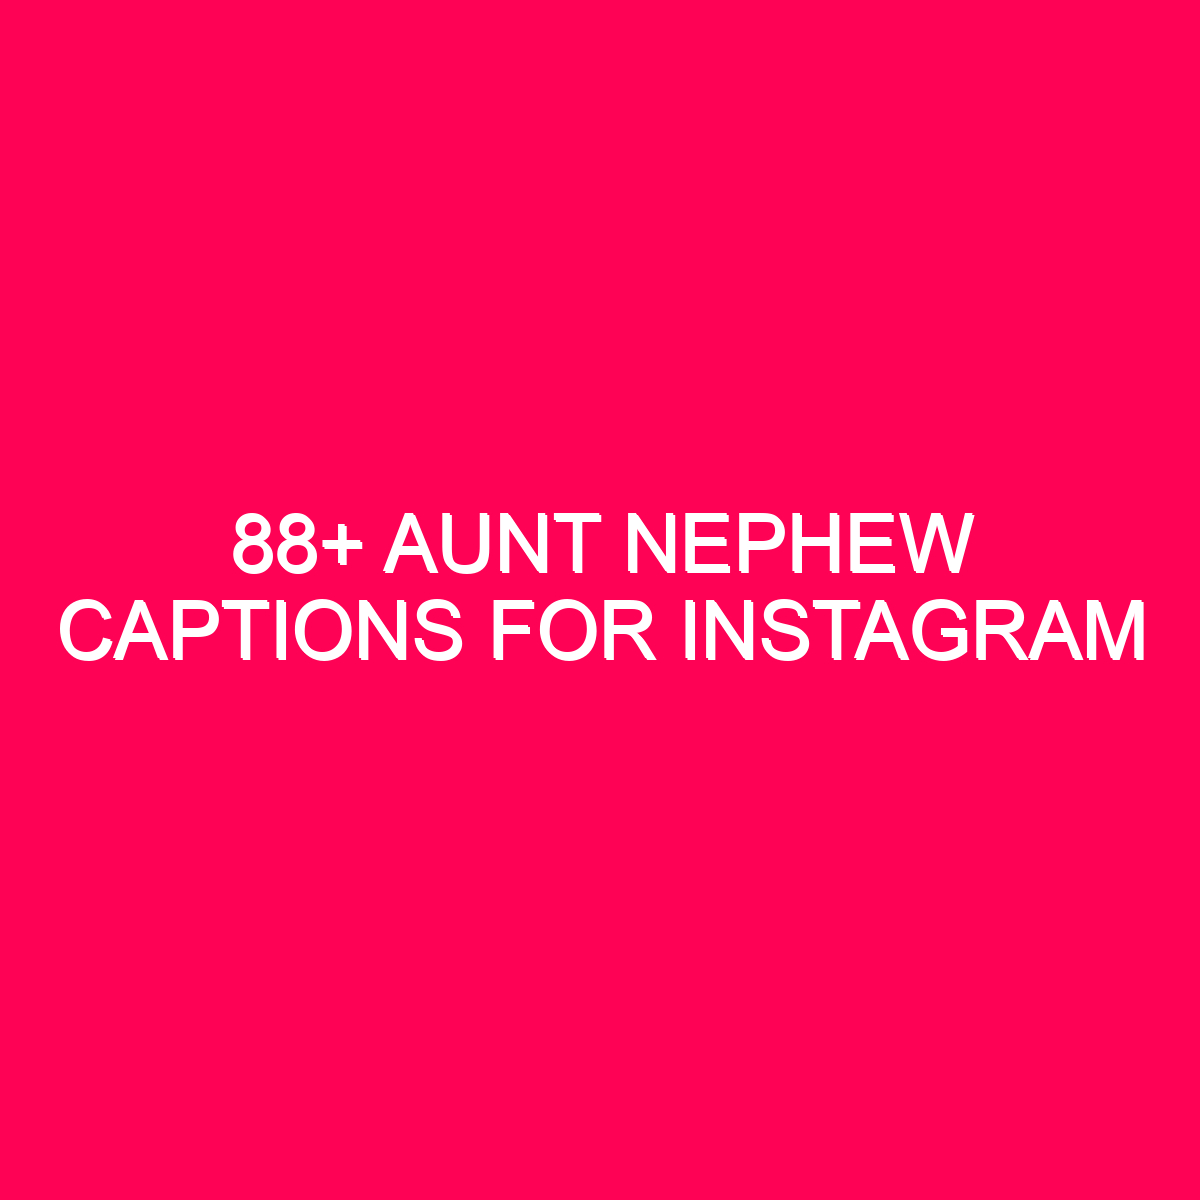 Aunt Nephew Captions For Instagram